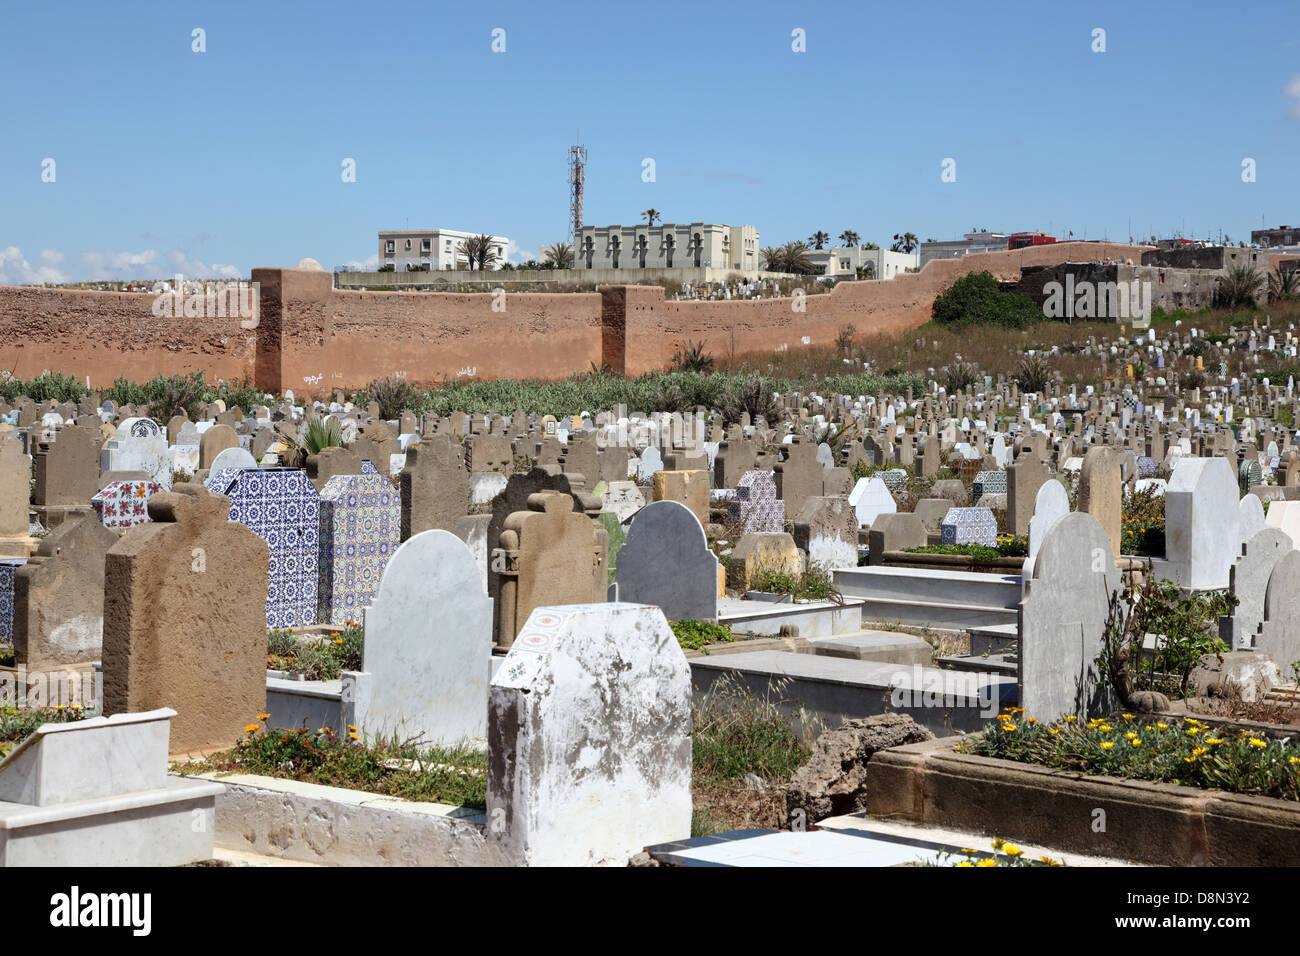 Tombstones at the islamic graveyard in Rabat, Morocco Stock Photo